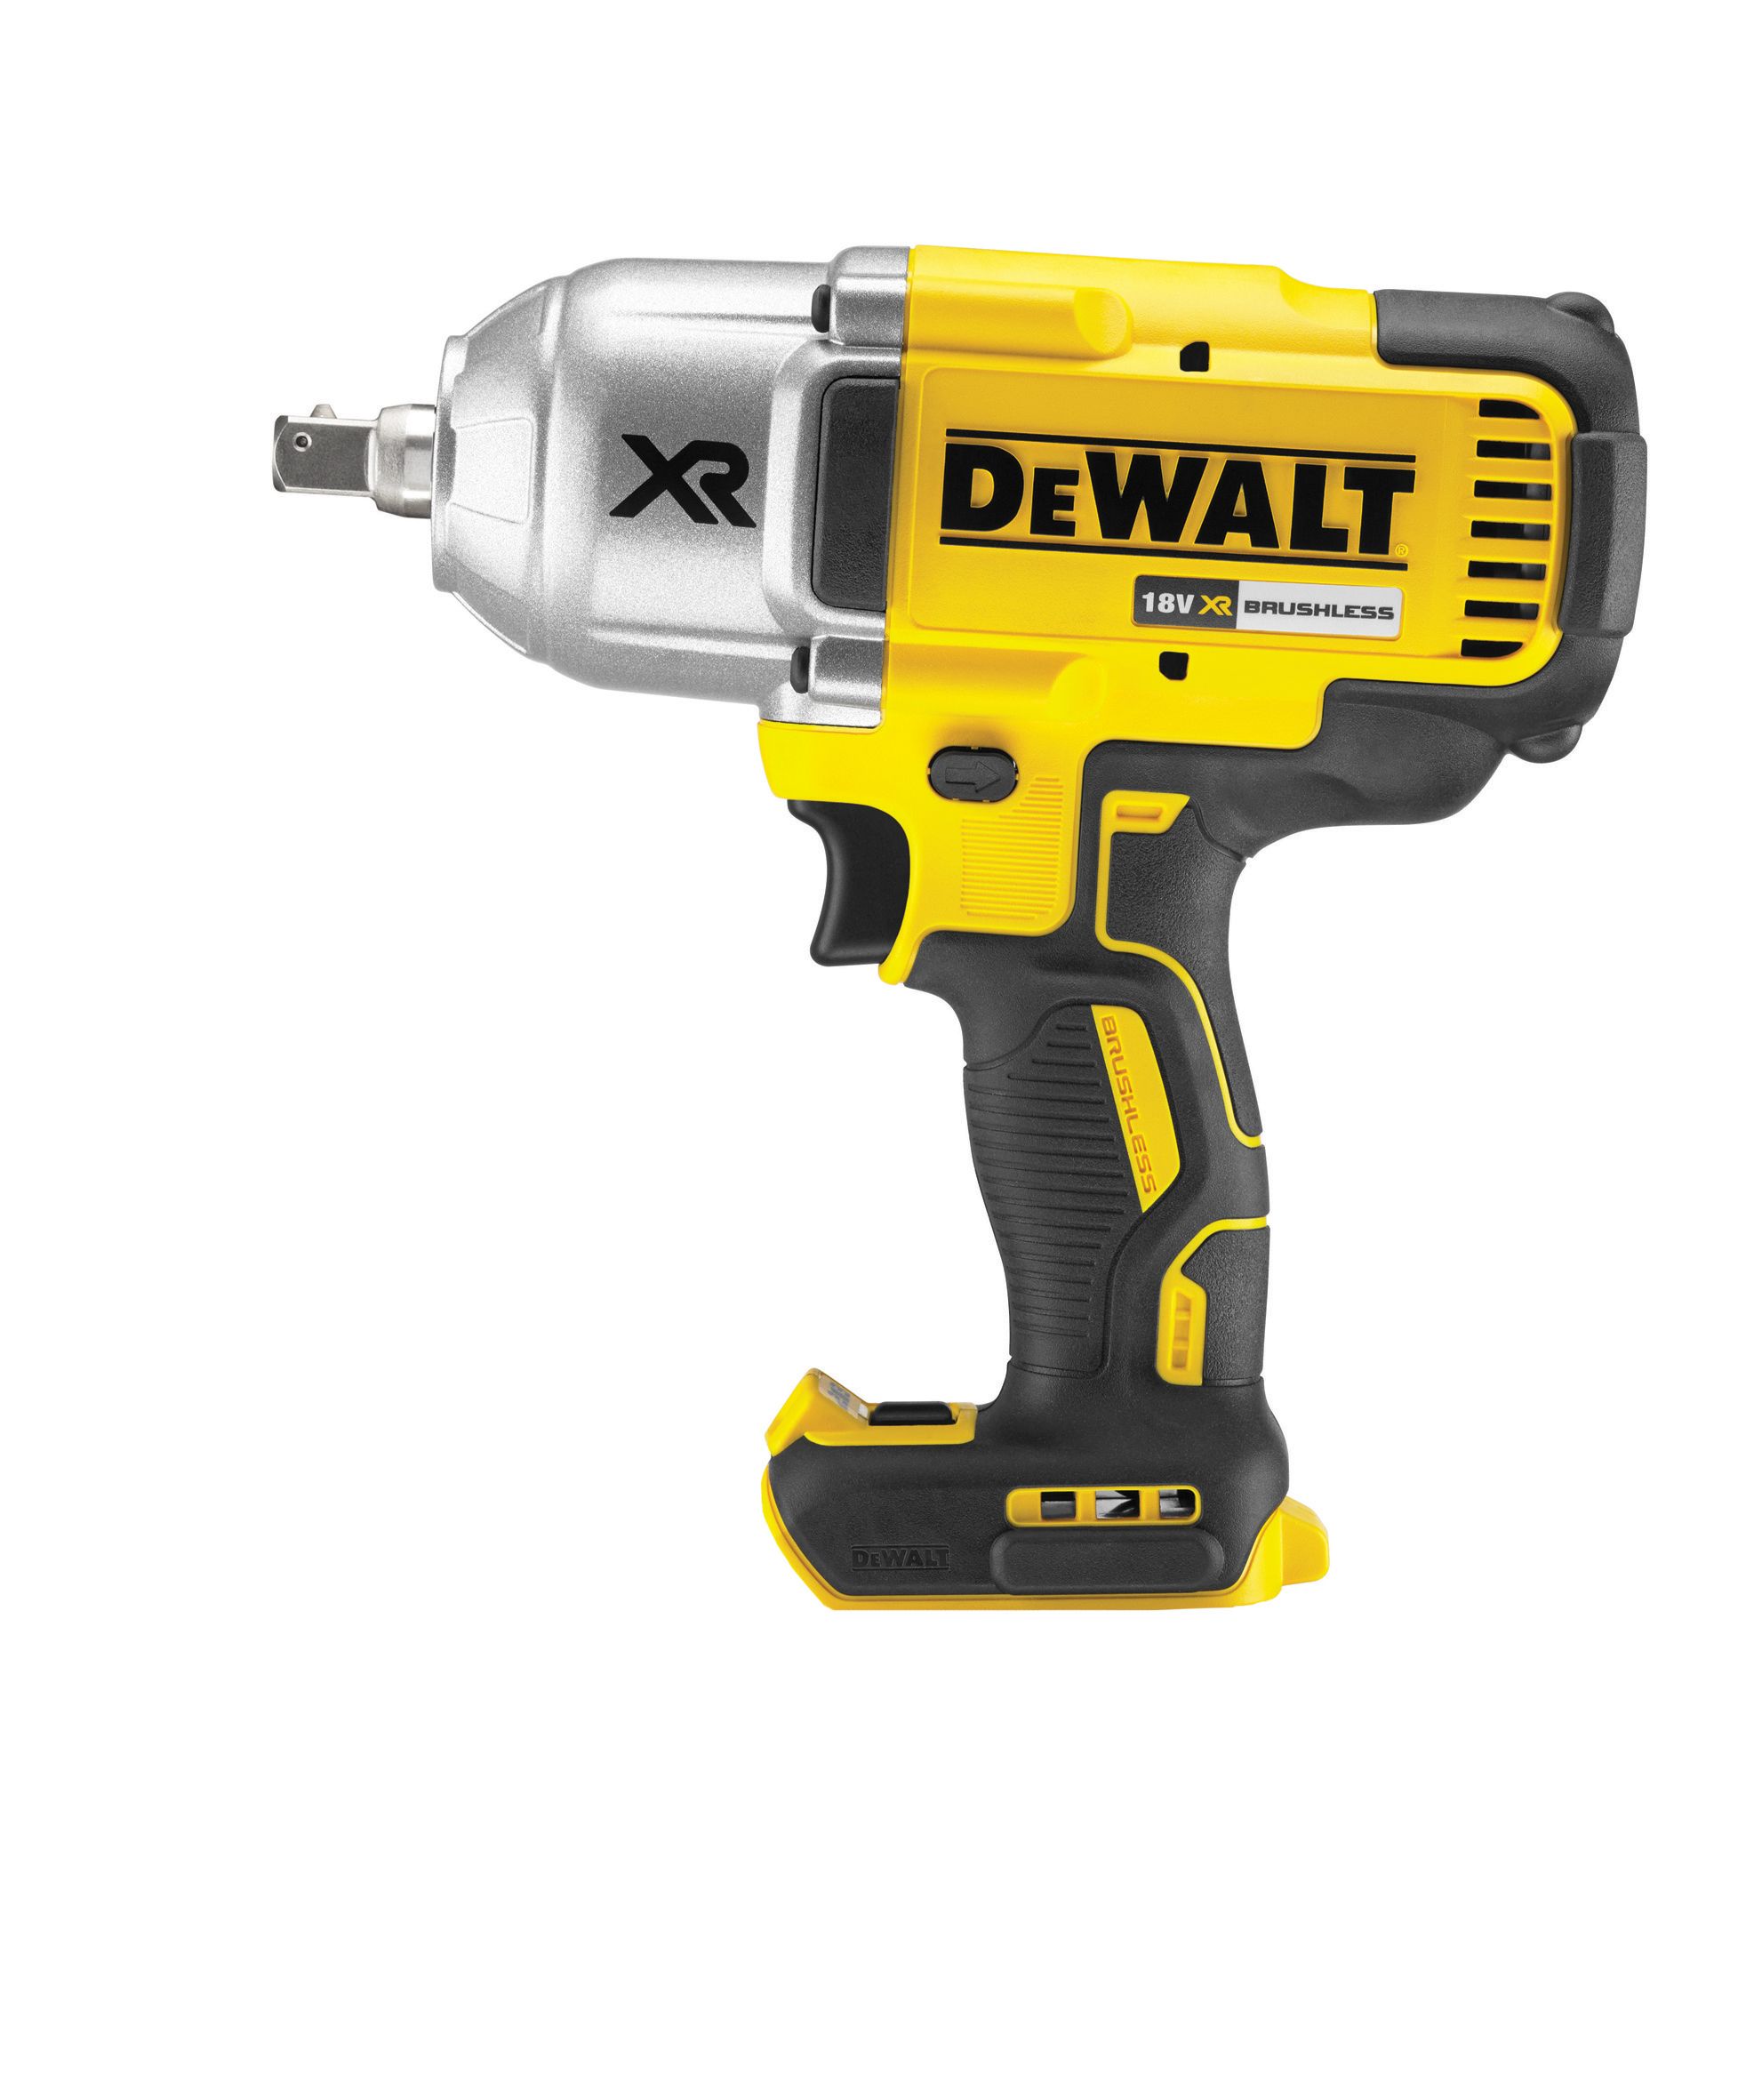 DeWalt XR 18V Cordless Impact wrench (Bare Tool) - DCF899N-XJ - Bare